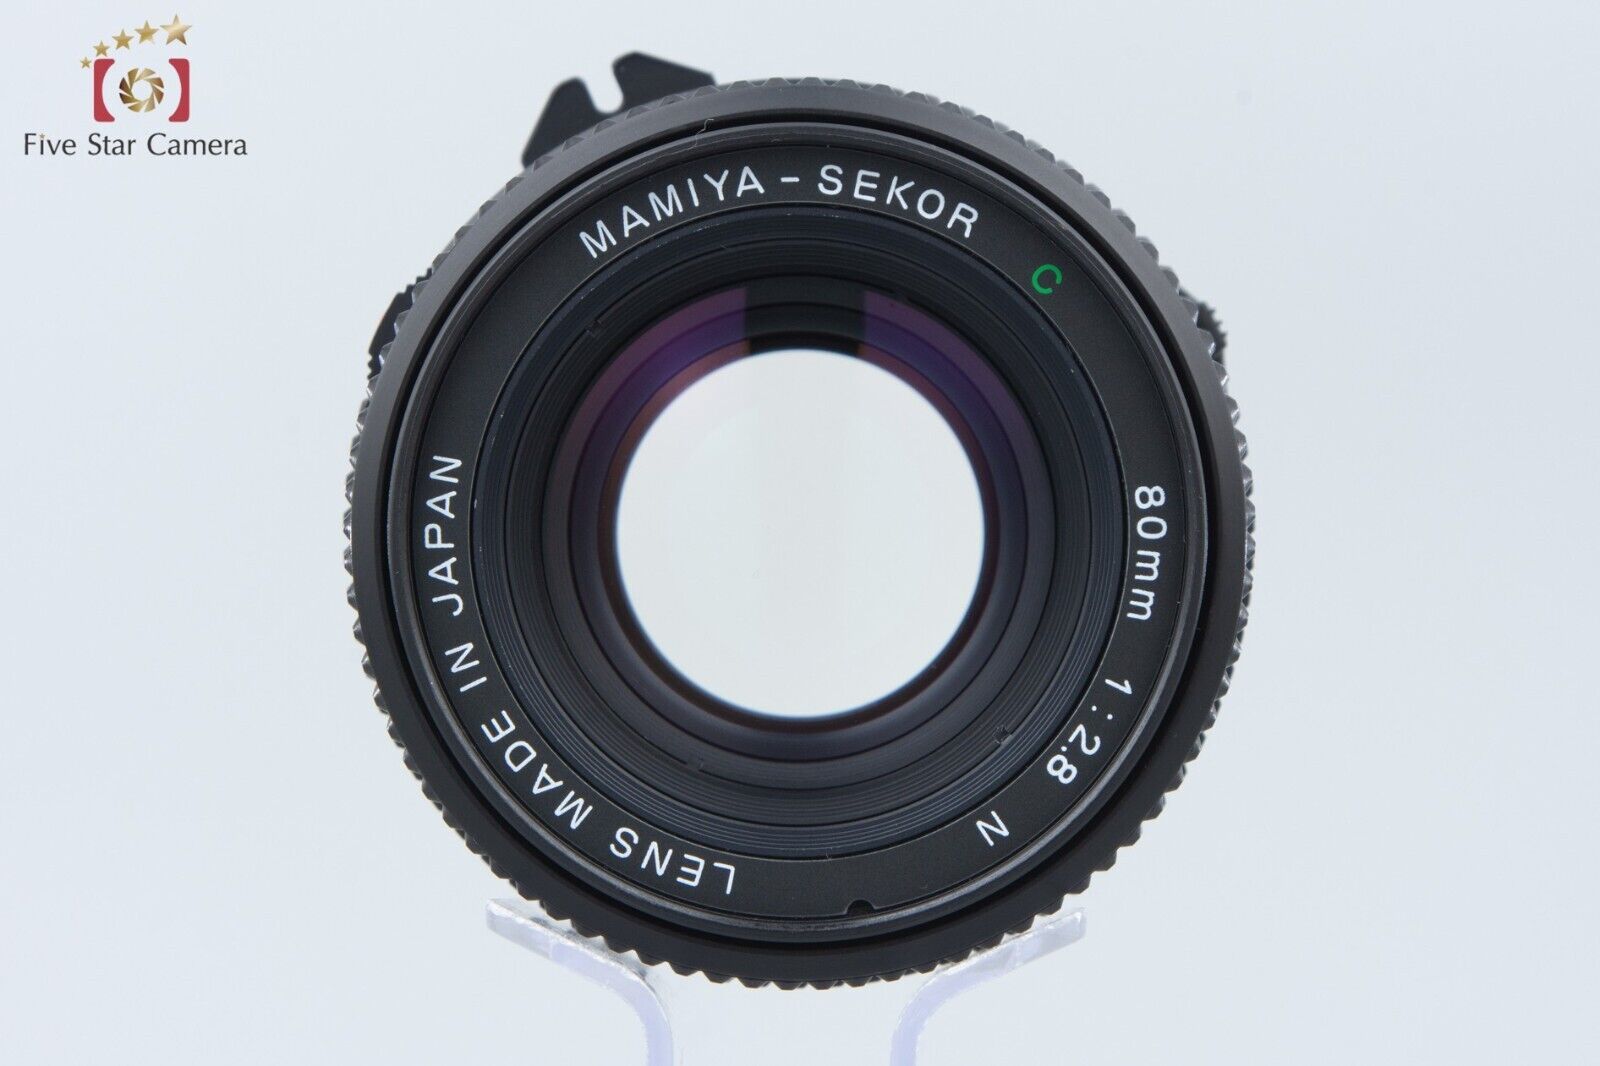 Mamiya SEKOR C 80mm f/2.8 N for 645